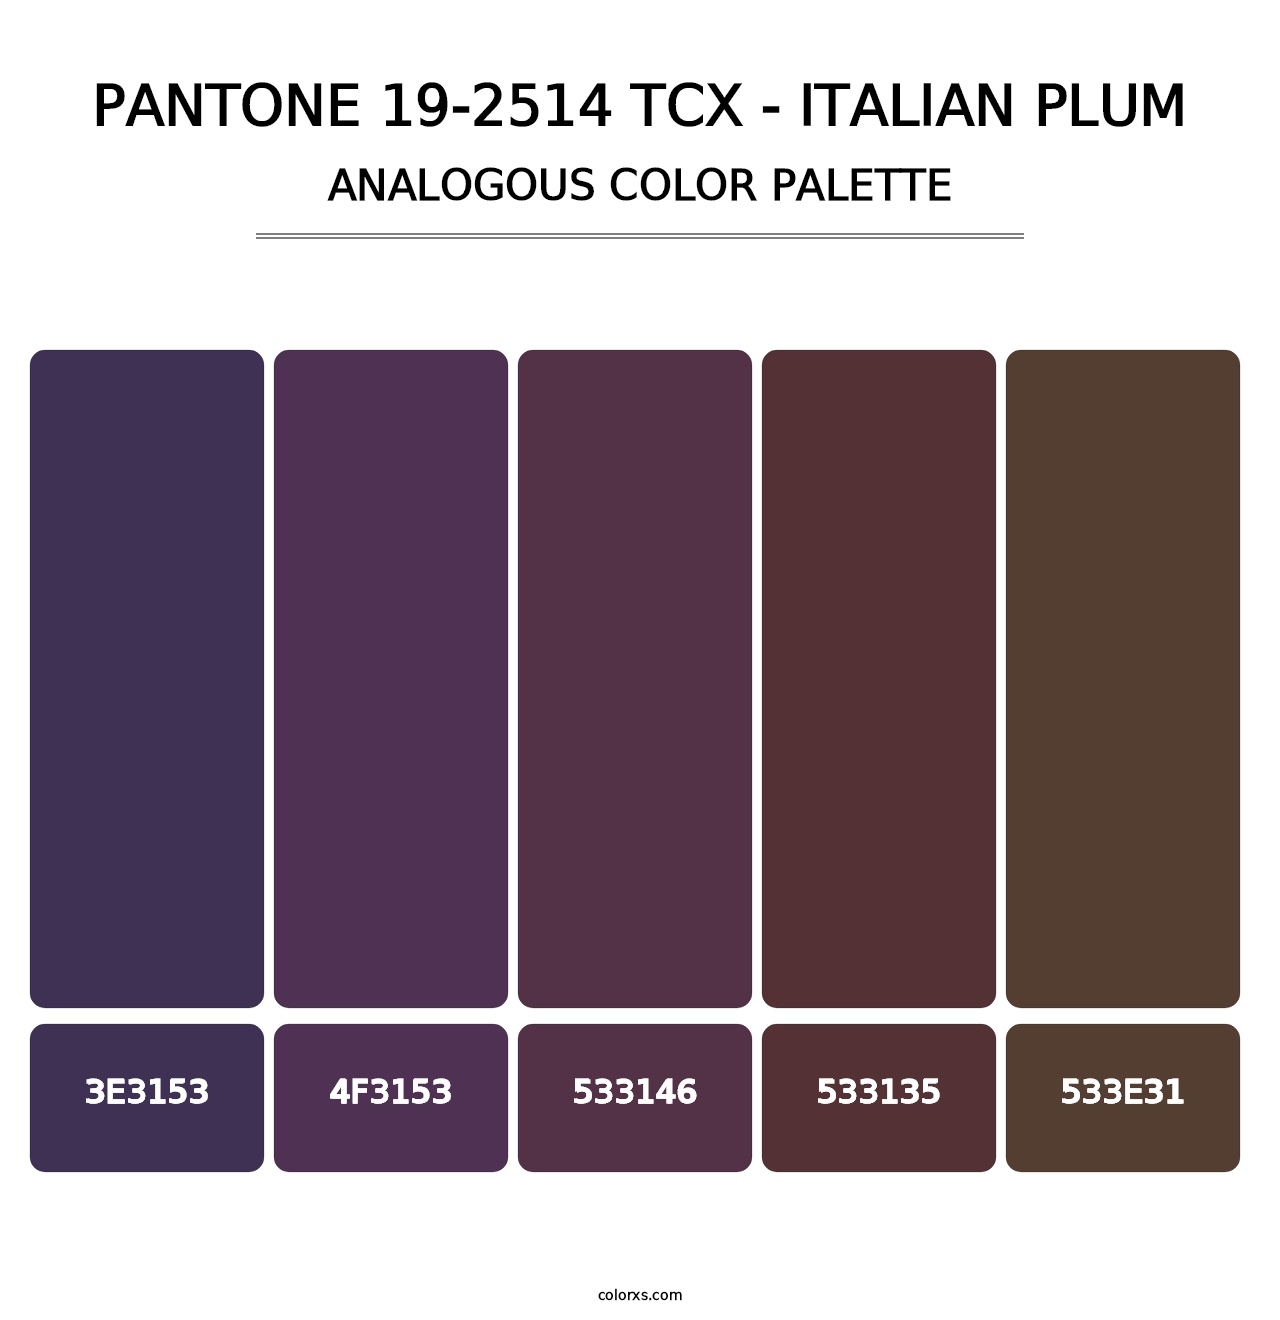 PANTONE 19-2514 TCX - Italian Plum - Analogous Color Palette